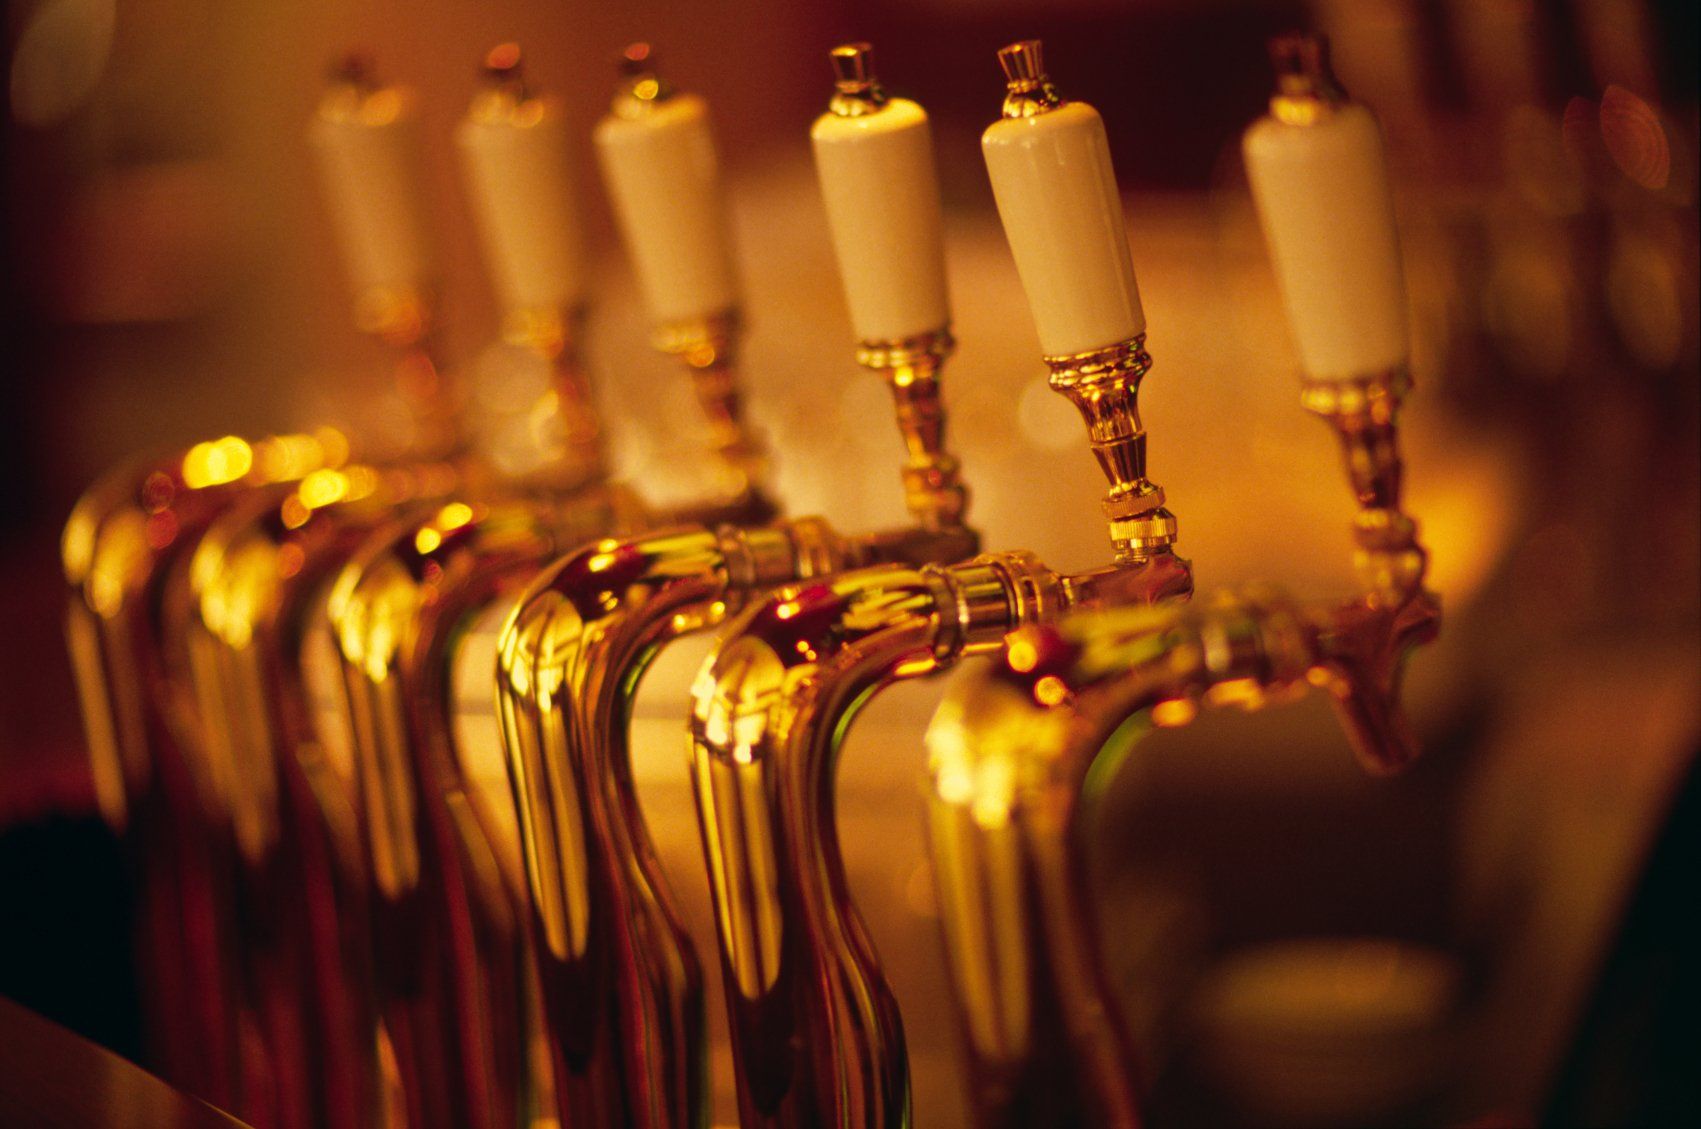 Beer tap handles in a row.